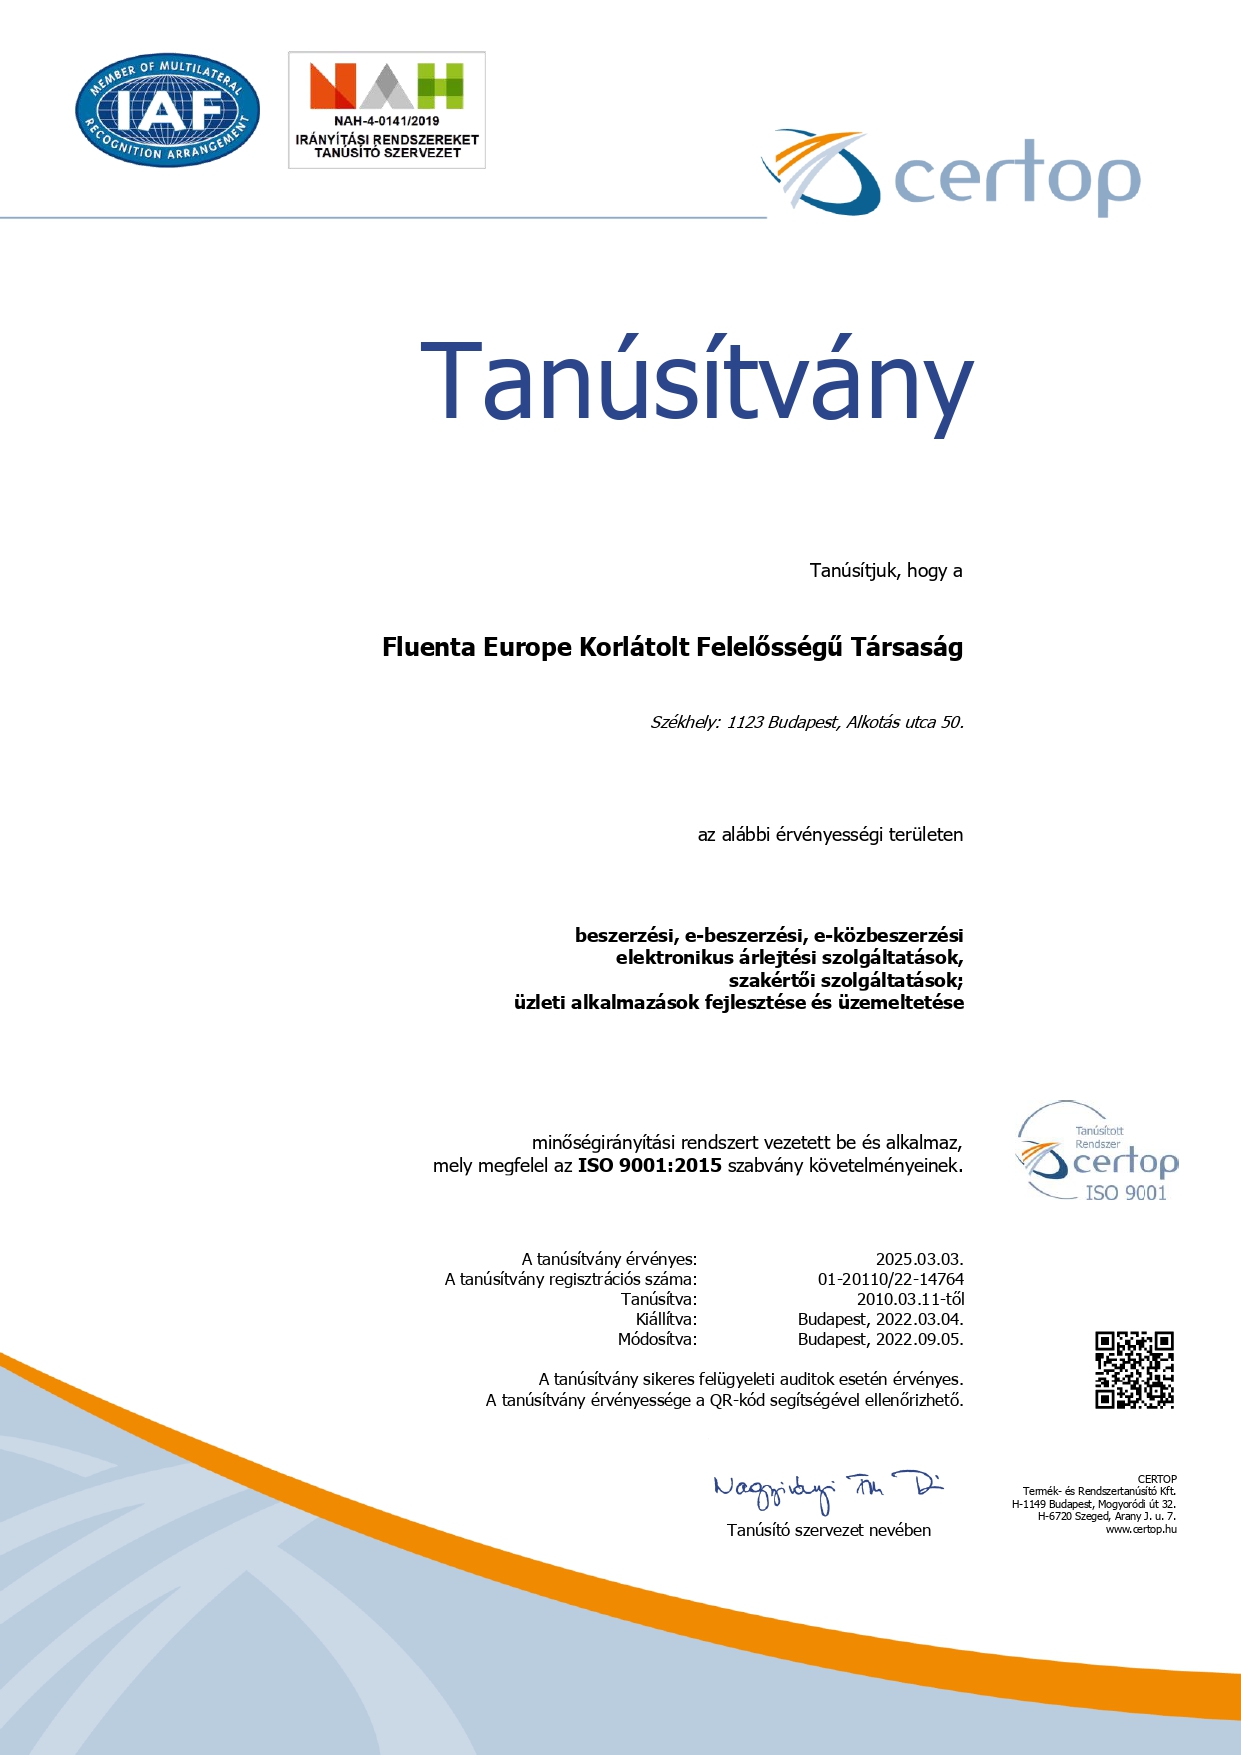 tanusitvany_MIR_magyar_HU20110-22_2022-09-05_pages-to-jpg-0001